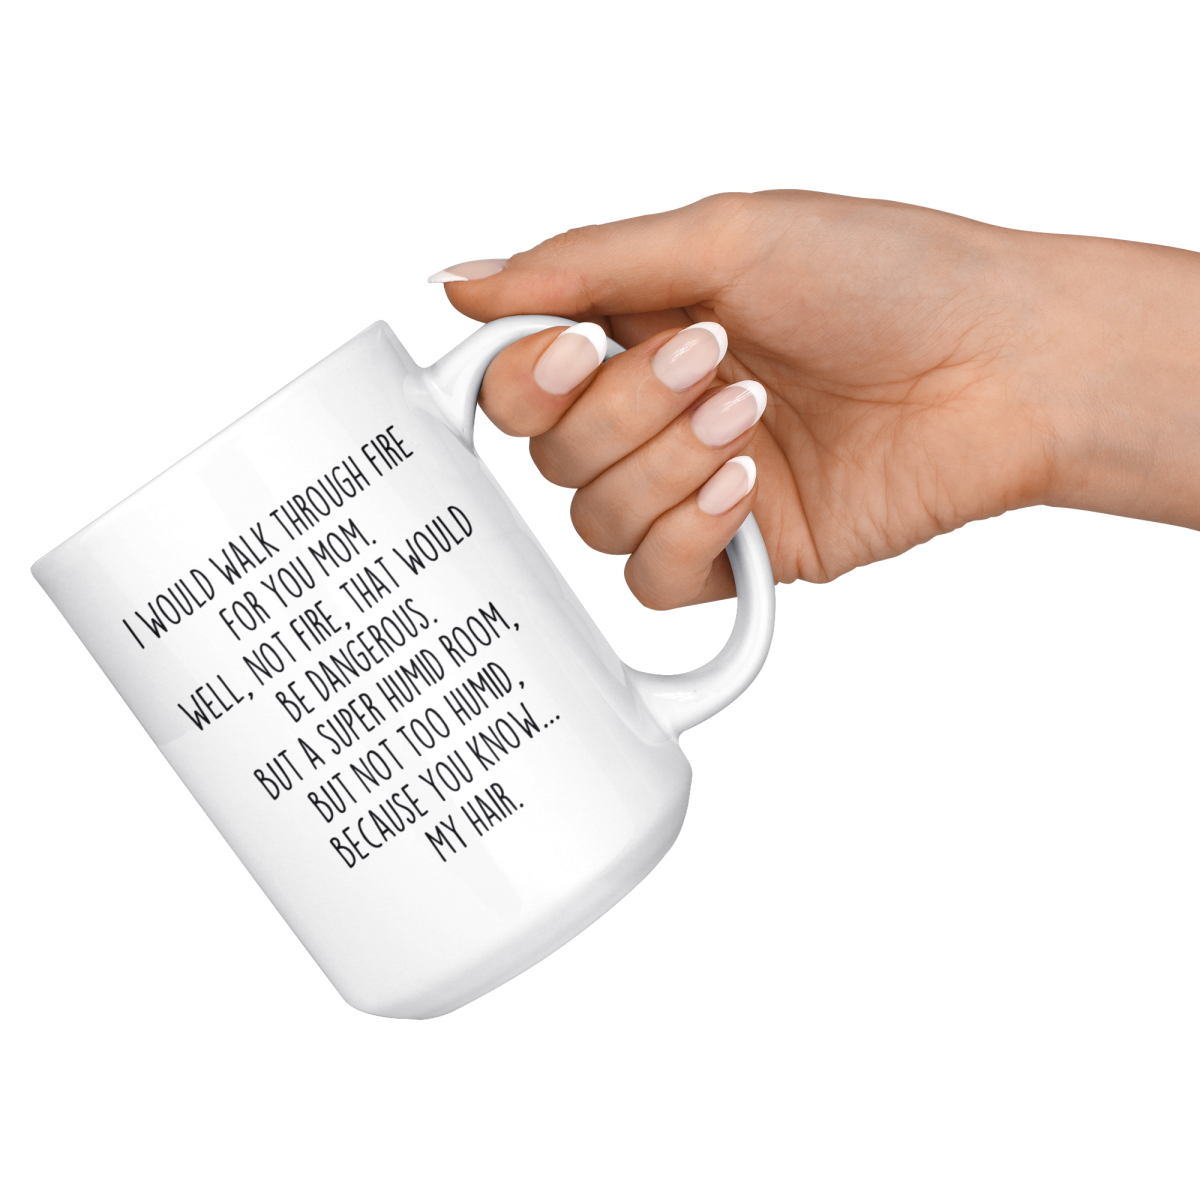 Funny Trump Mom Coffee Mug President Donald Trump Themed Gag Gift for –  BackyardPeaks